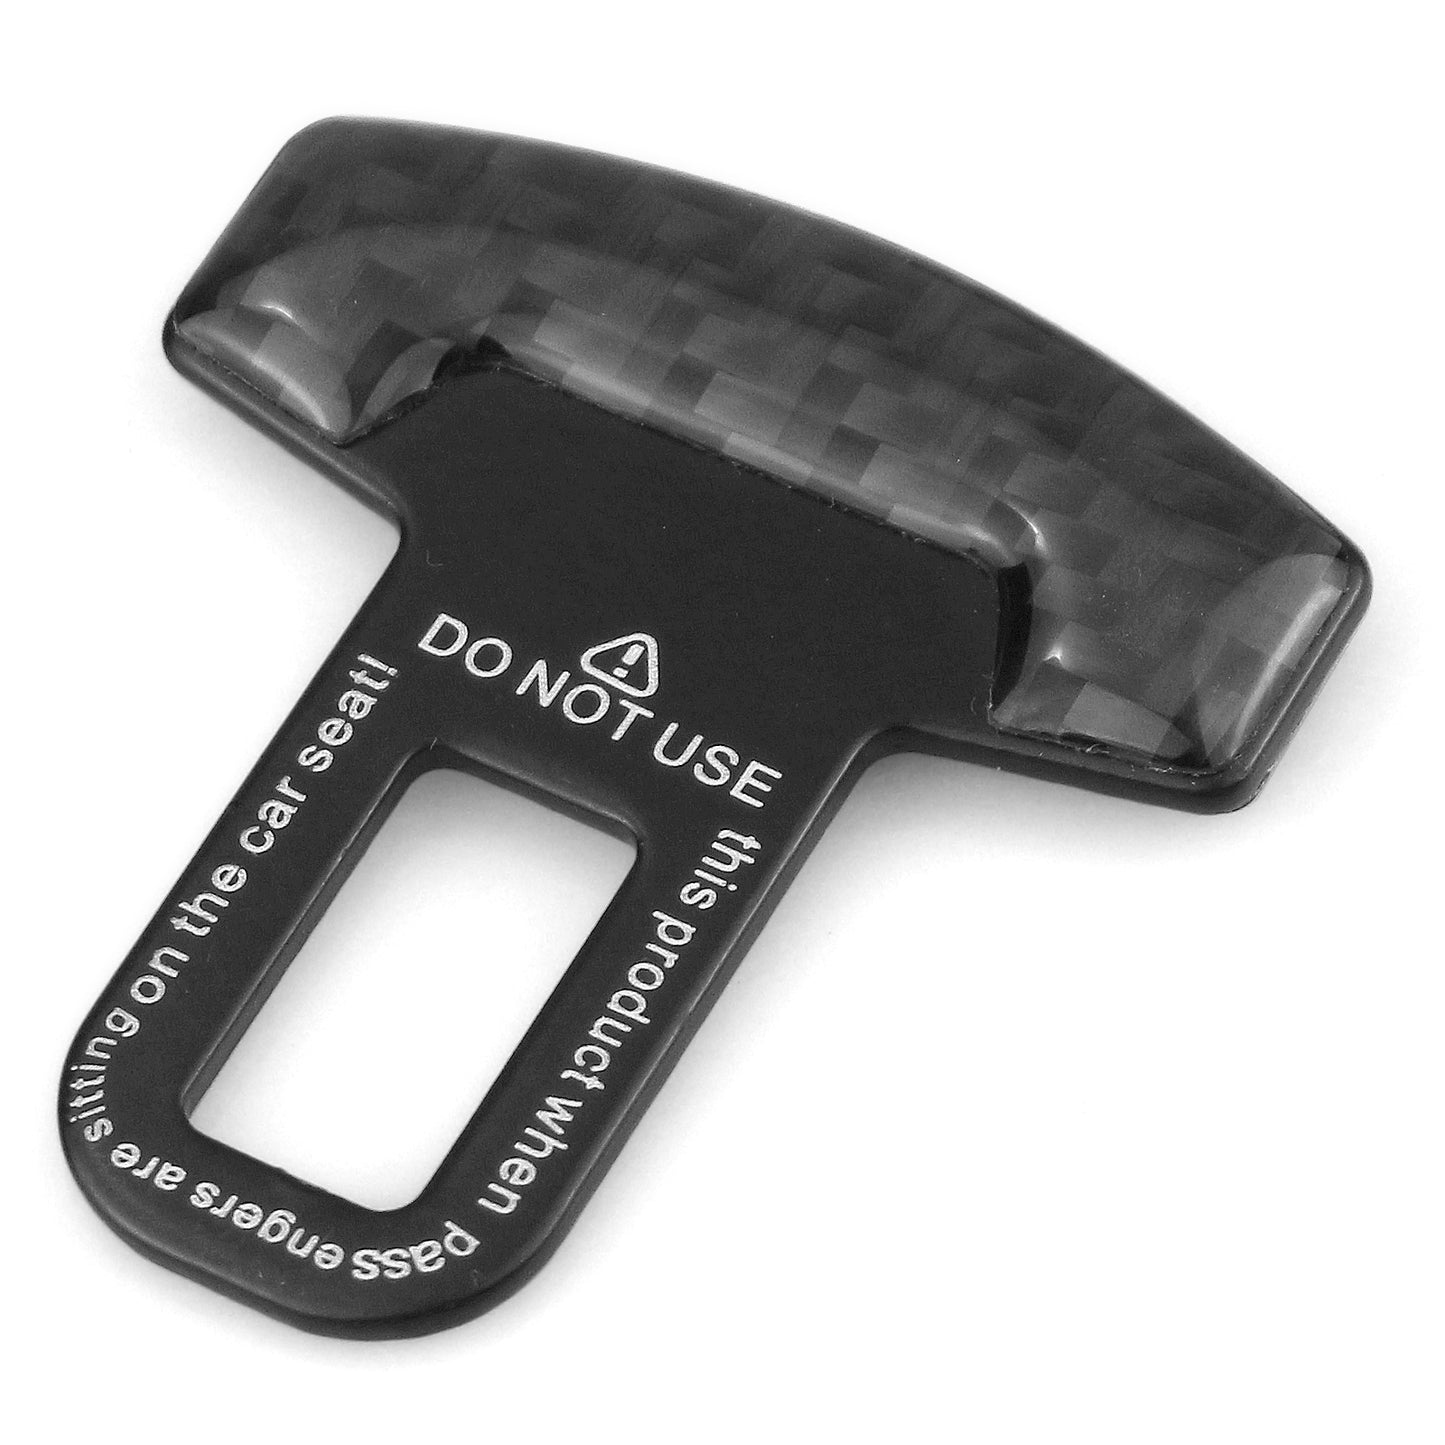 MAD BABOON Carbon-Fibre seat belt buckle inserted into alarm stopper bottle opener seat belt clip